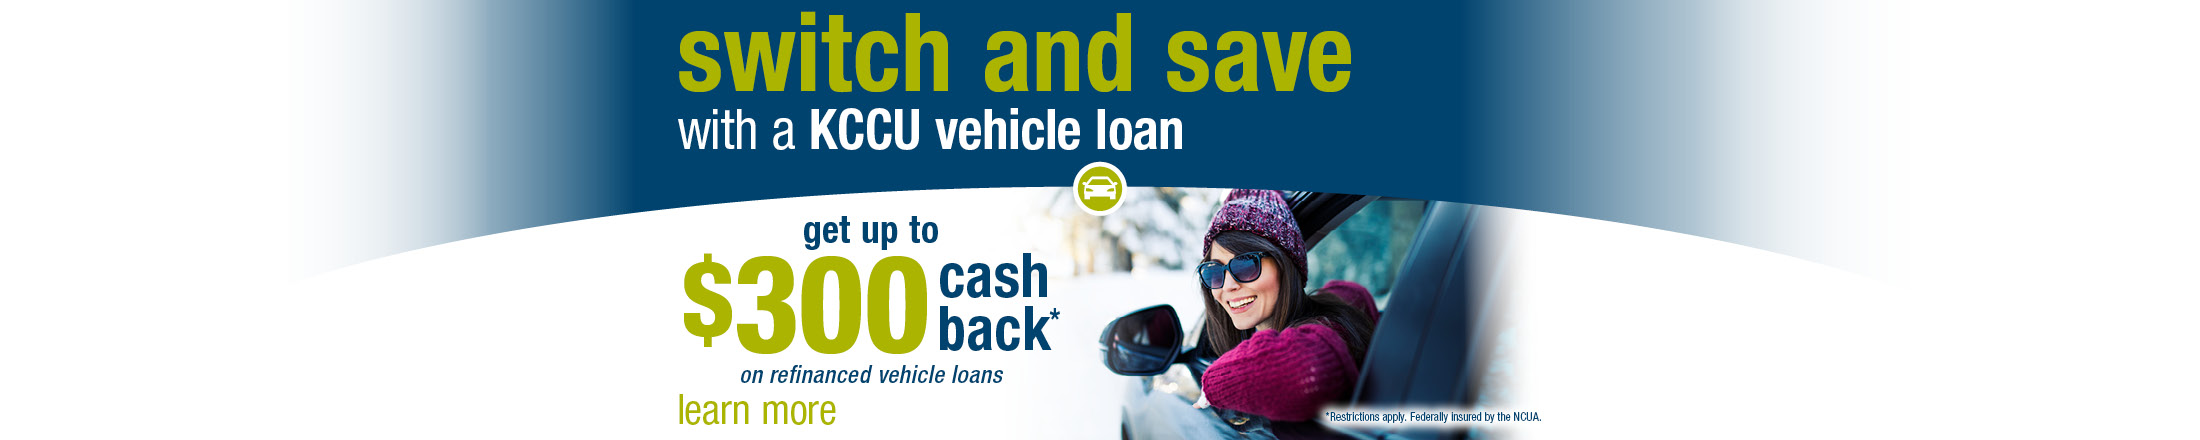 Cash back auto loan promo